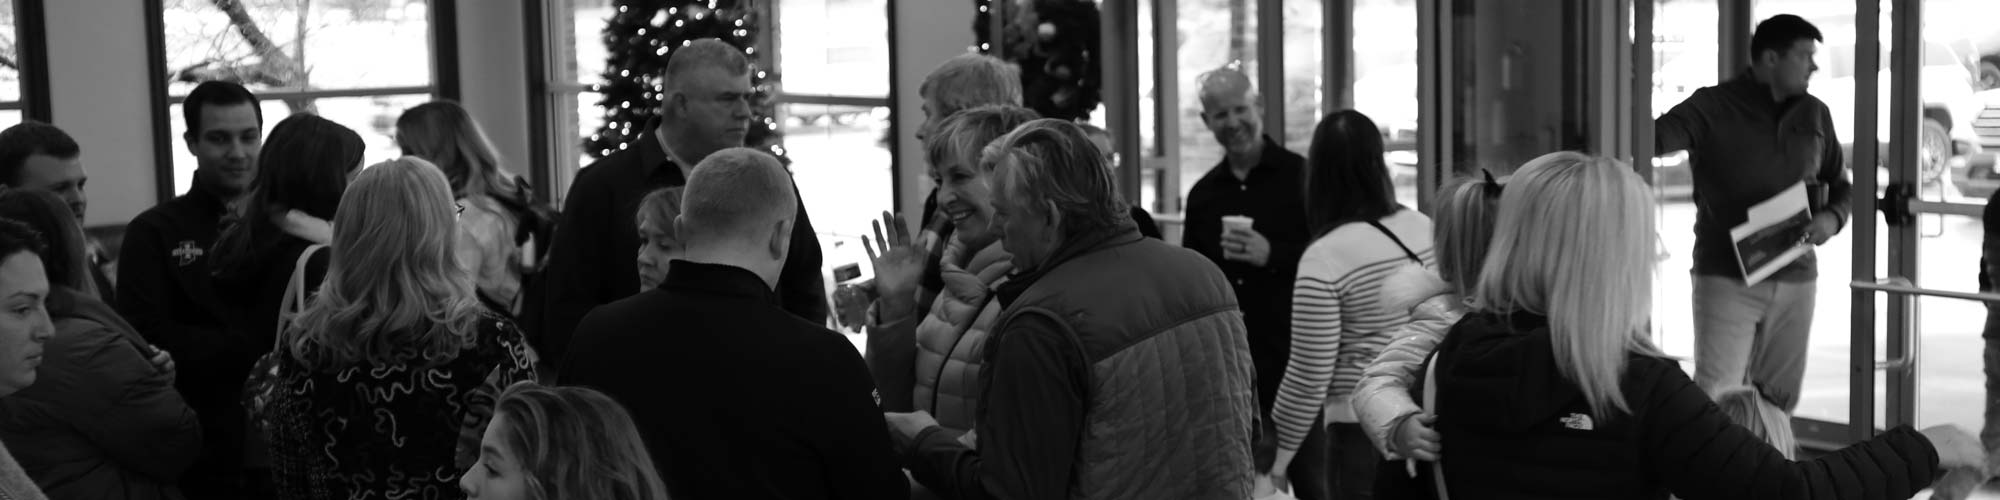 group of great oaks church parishioners talking reception area